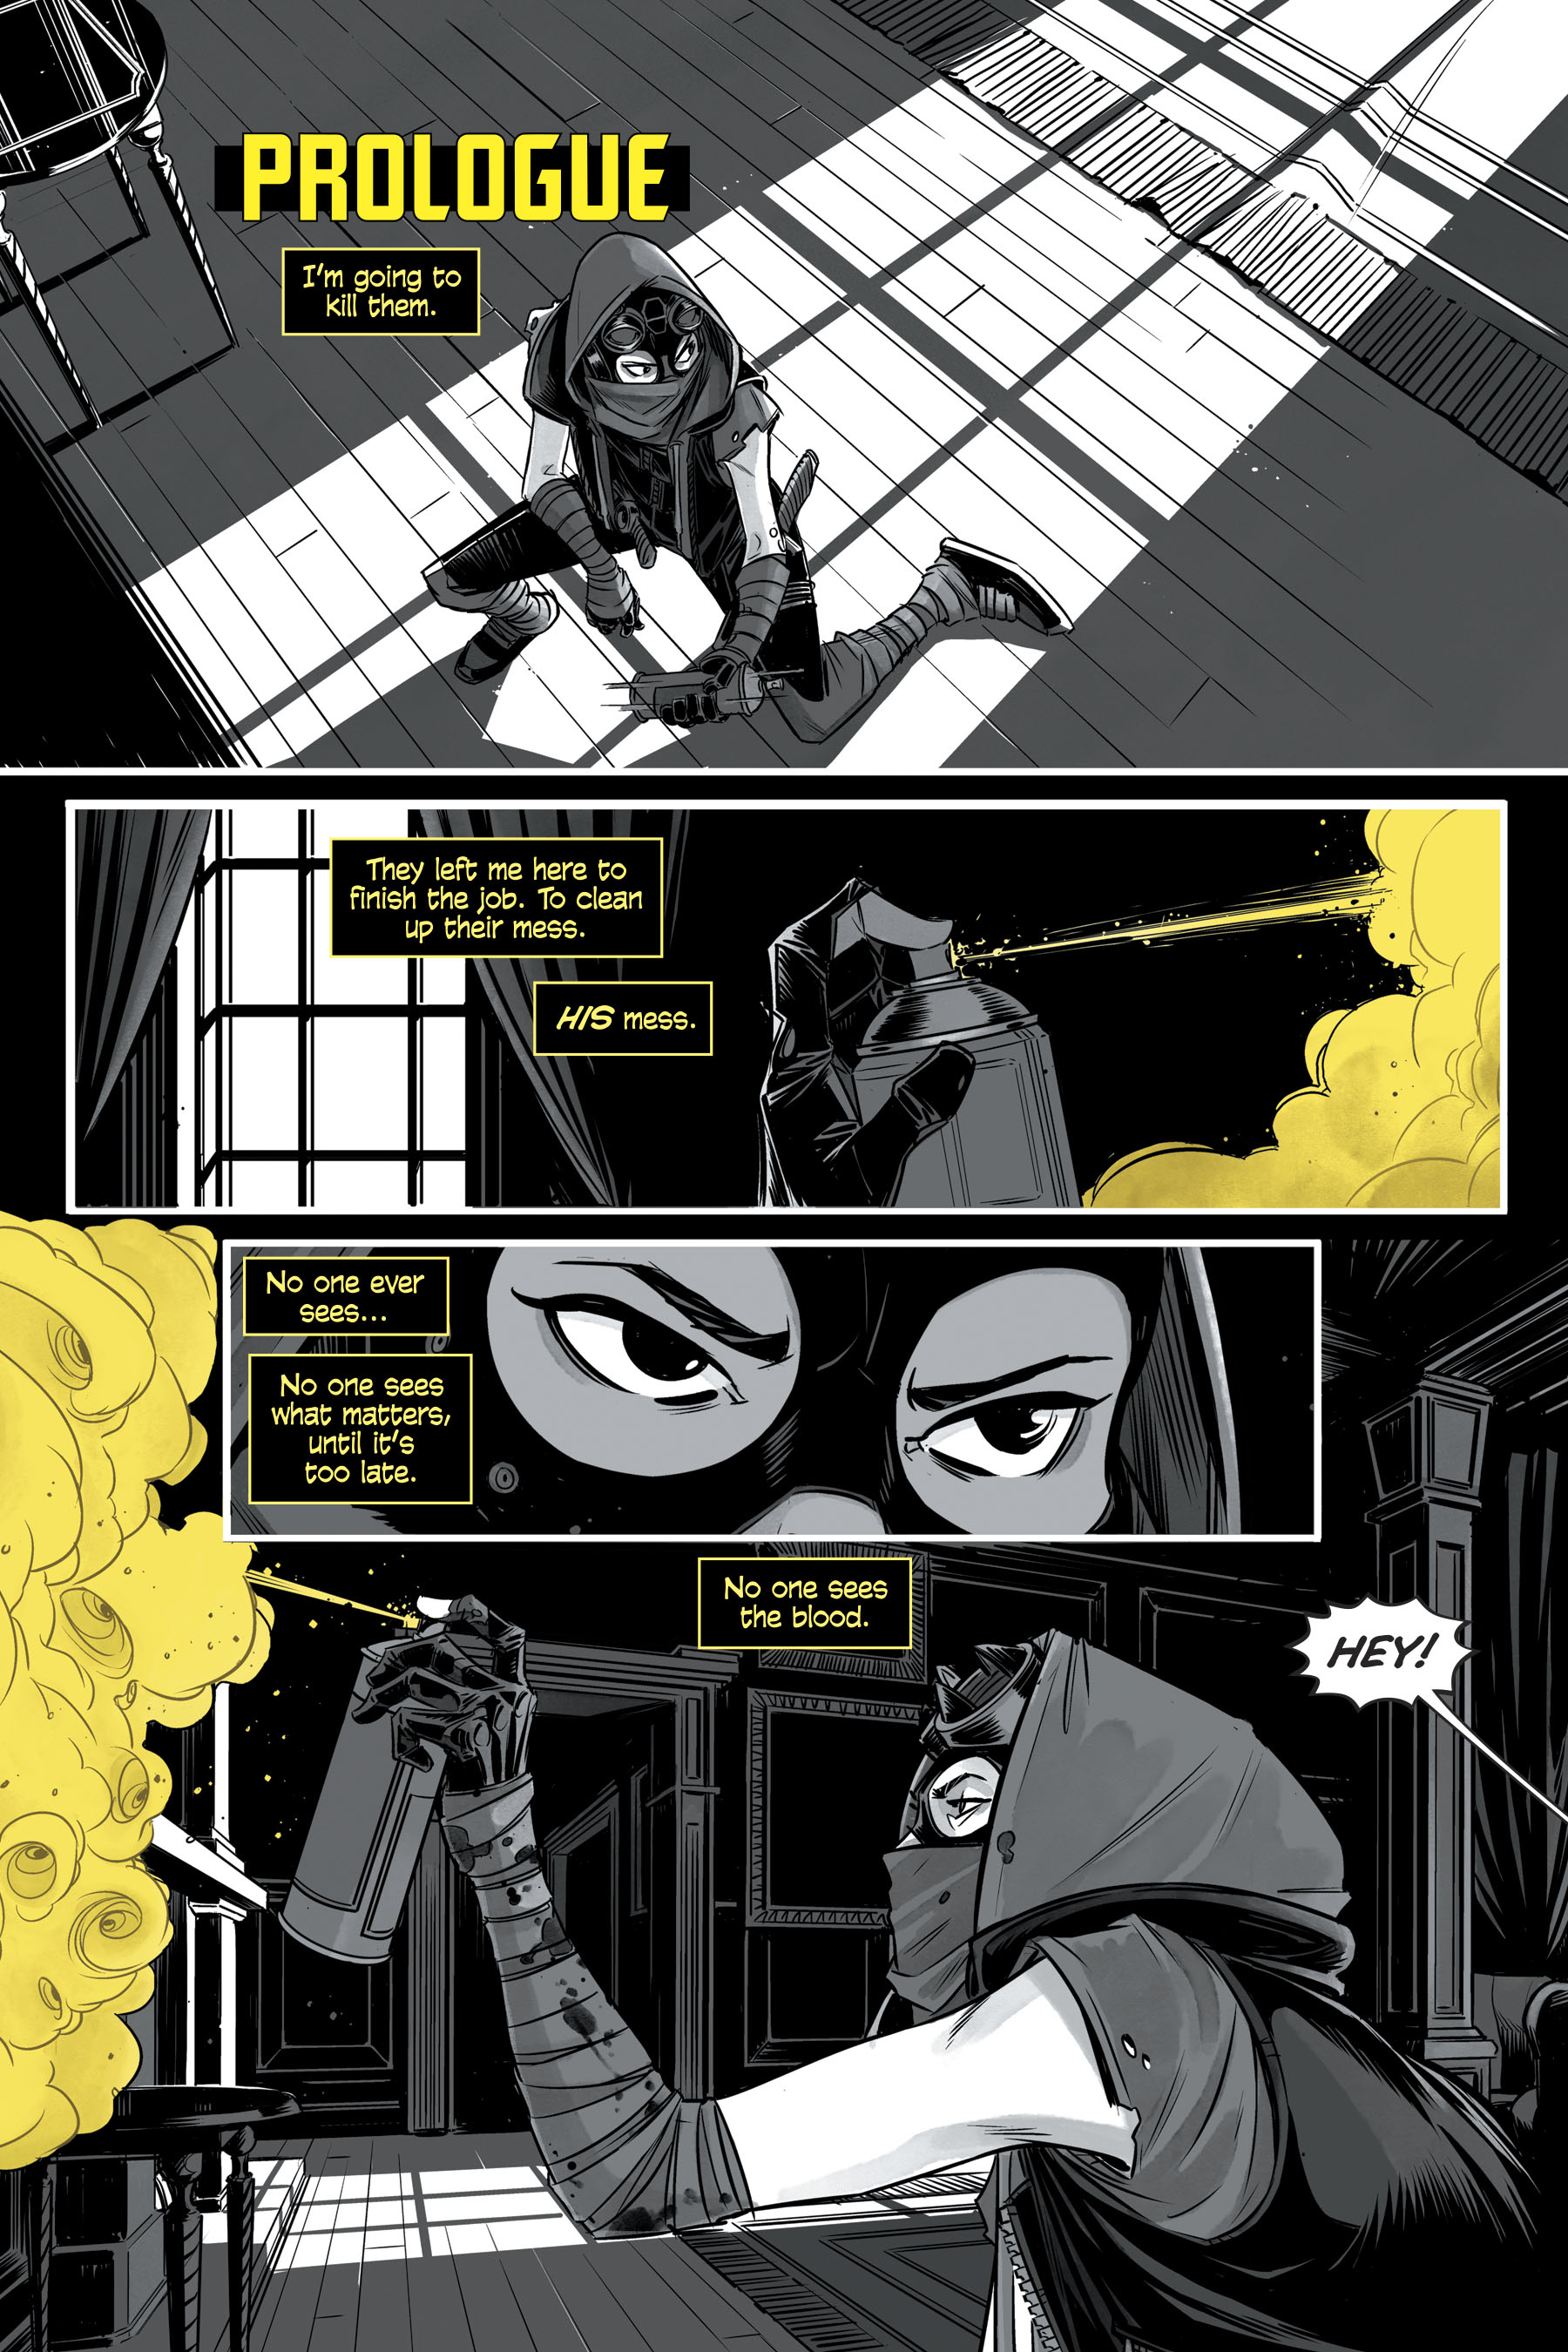 Batman: Nightwalker (2019-): Chapter 1SpecialEdition - Page 3